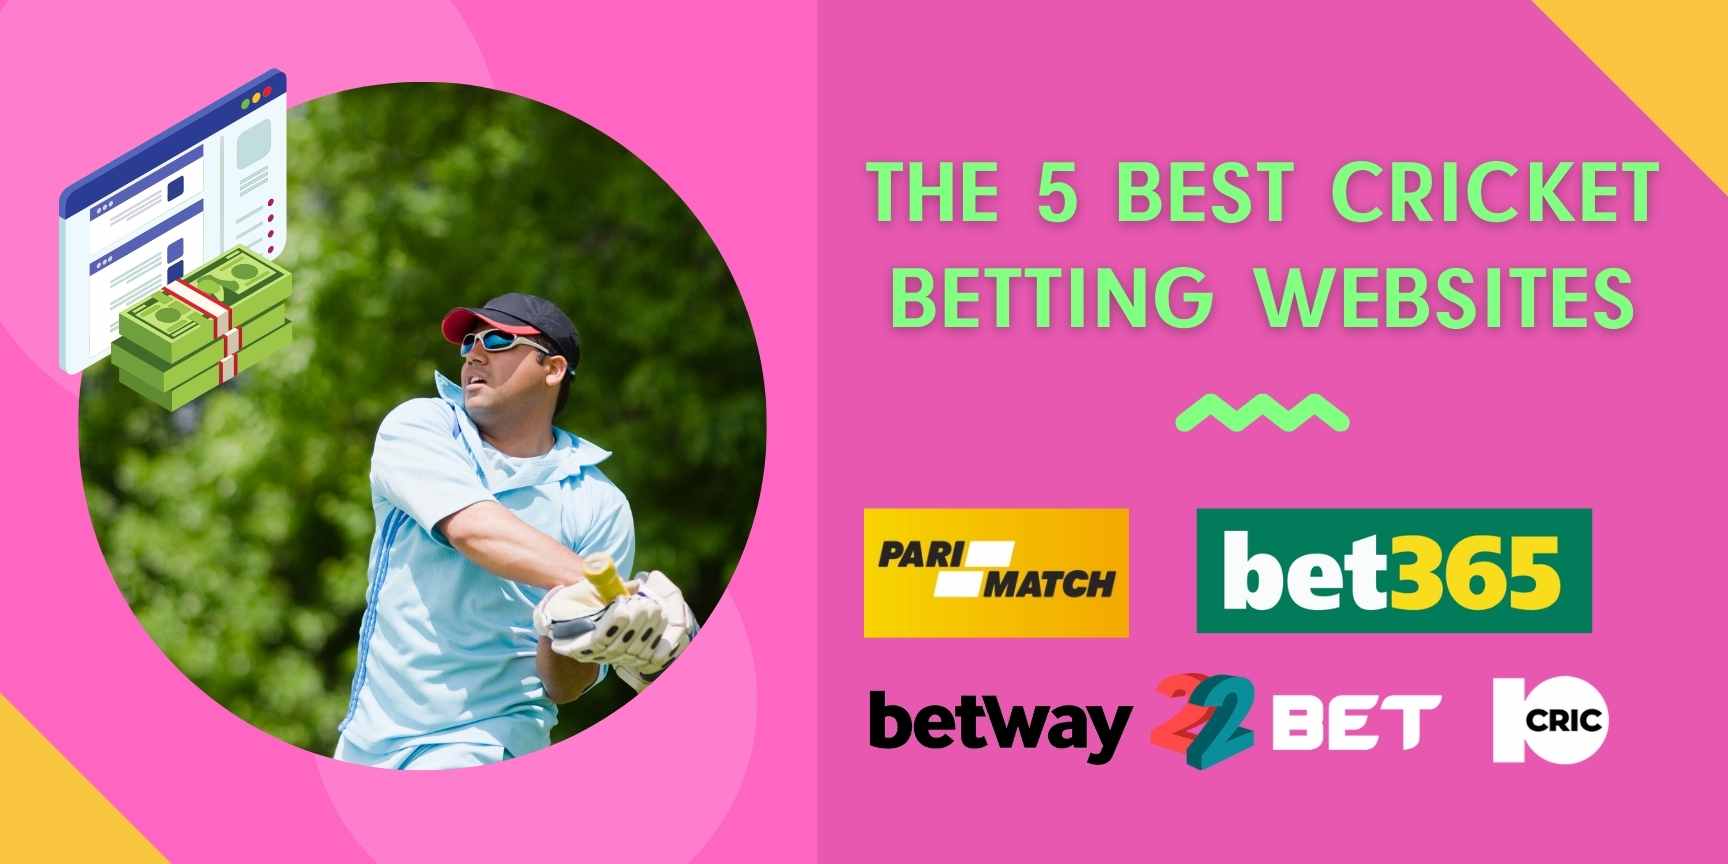 The 5 best cricket betting websites